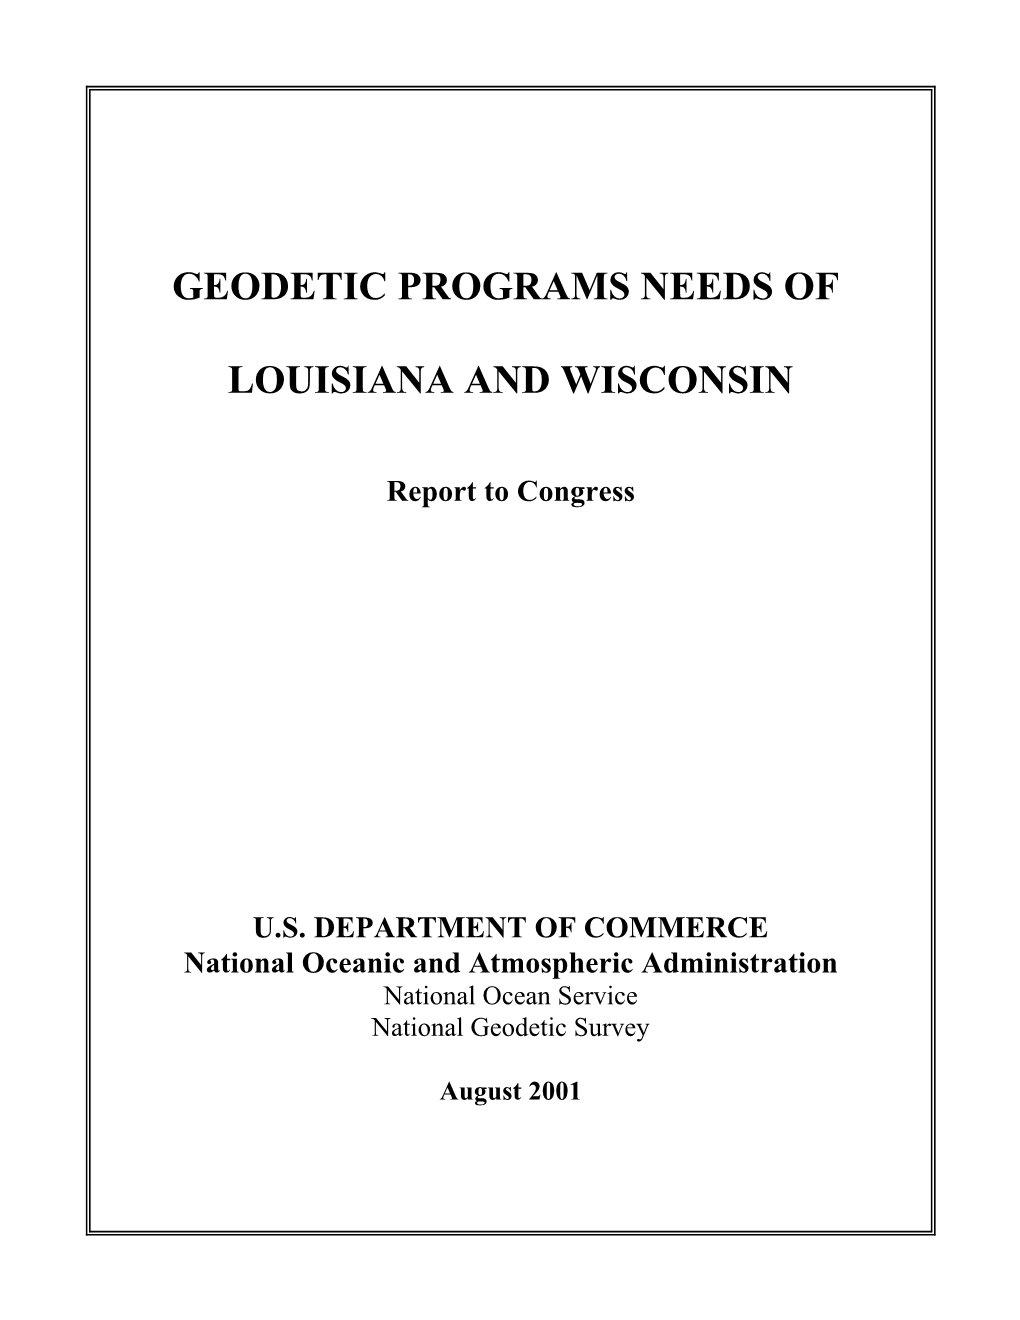 Geodetic Program Needs of Louisiana and Wisconsin